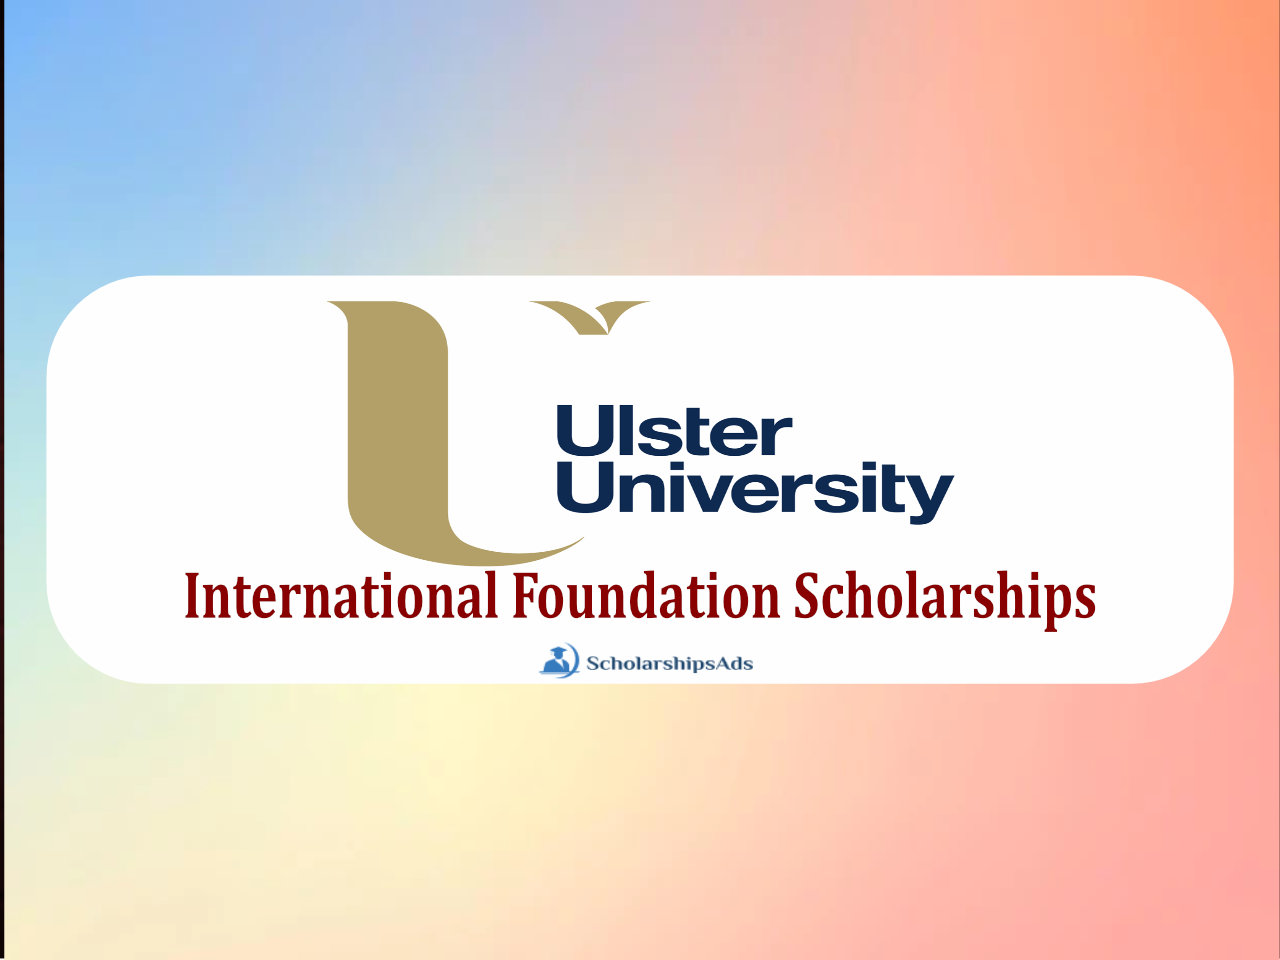  International Foundation Scholarships. 